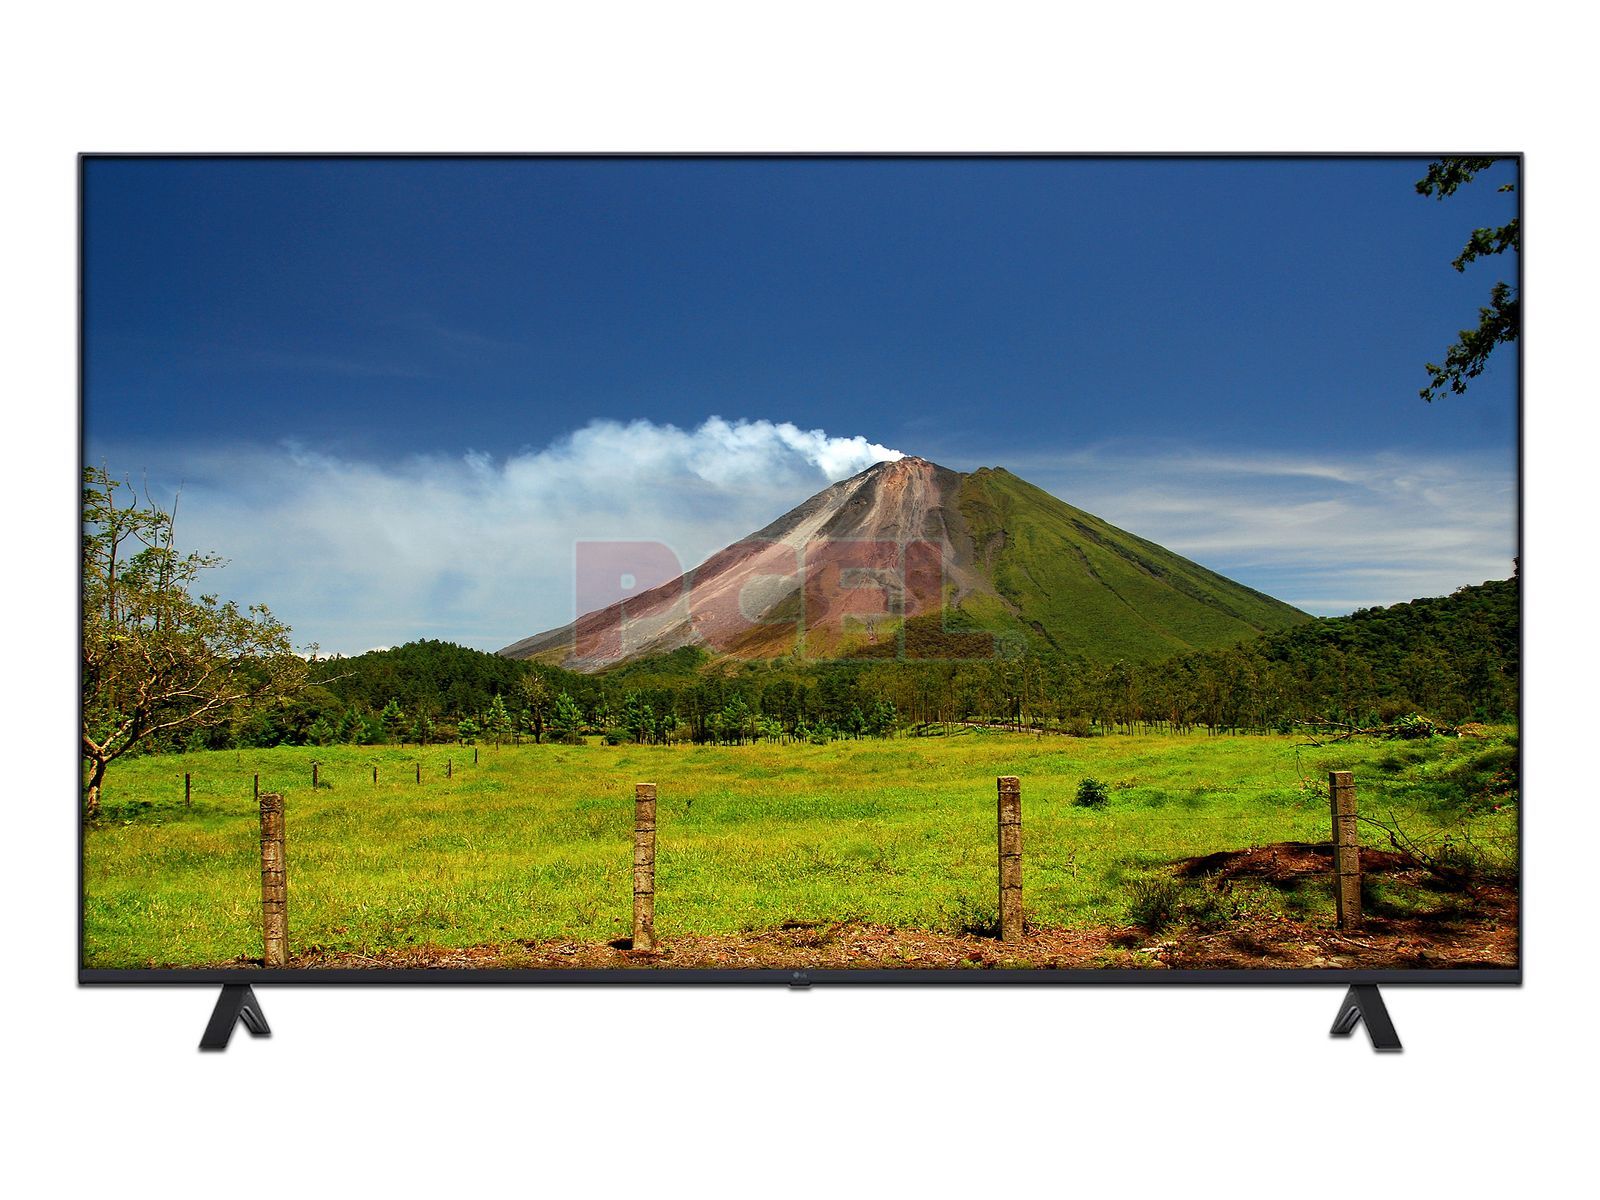 Pantalla LG Smart TV 55UR7800PSB 55 pulg. AI ThinQ 4K UHD